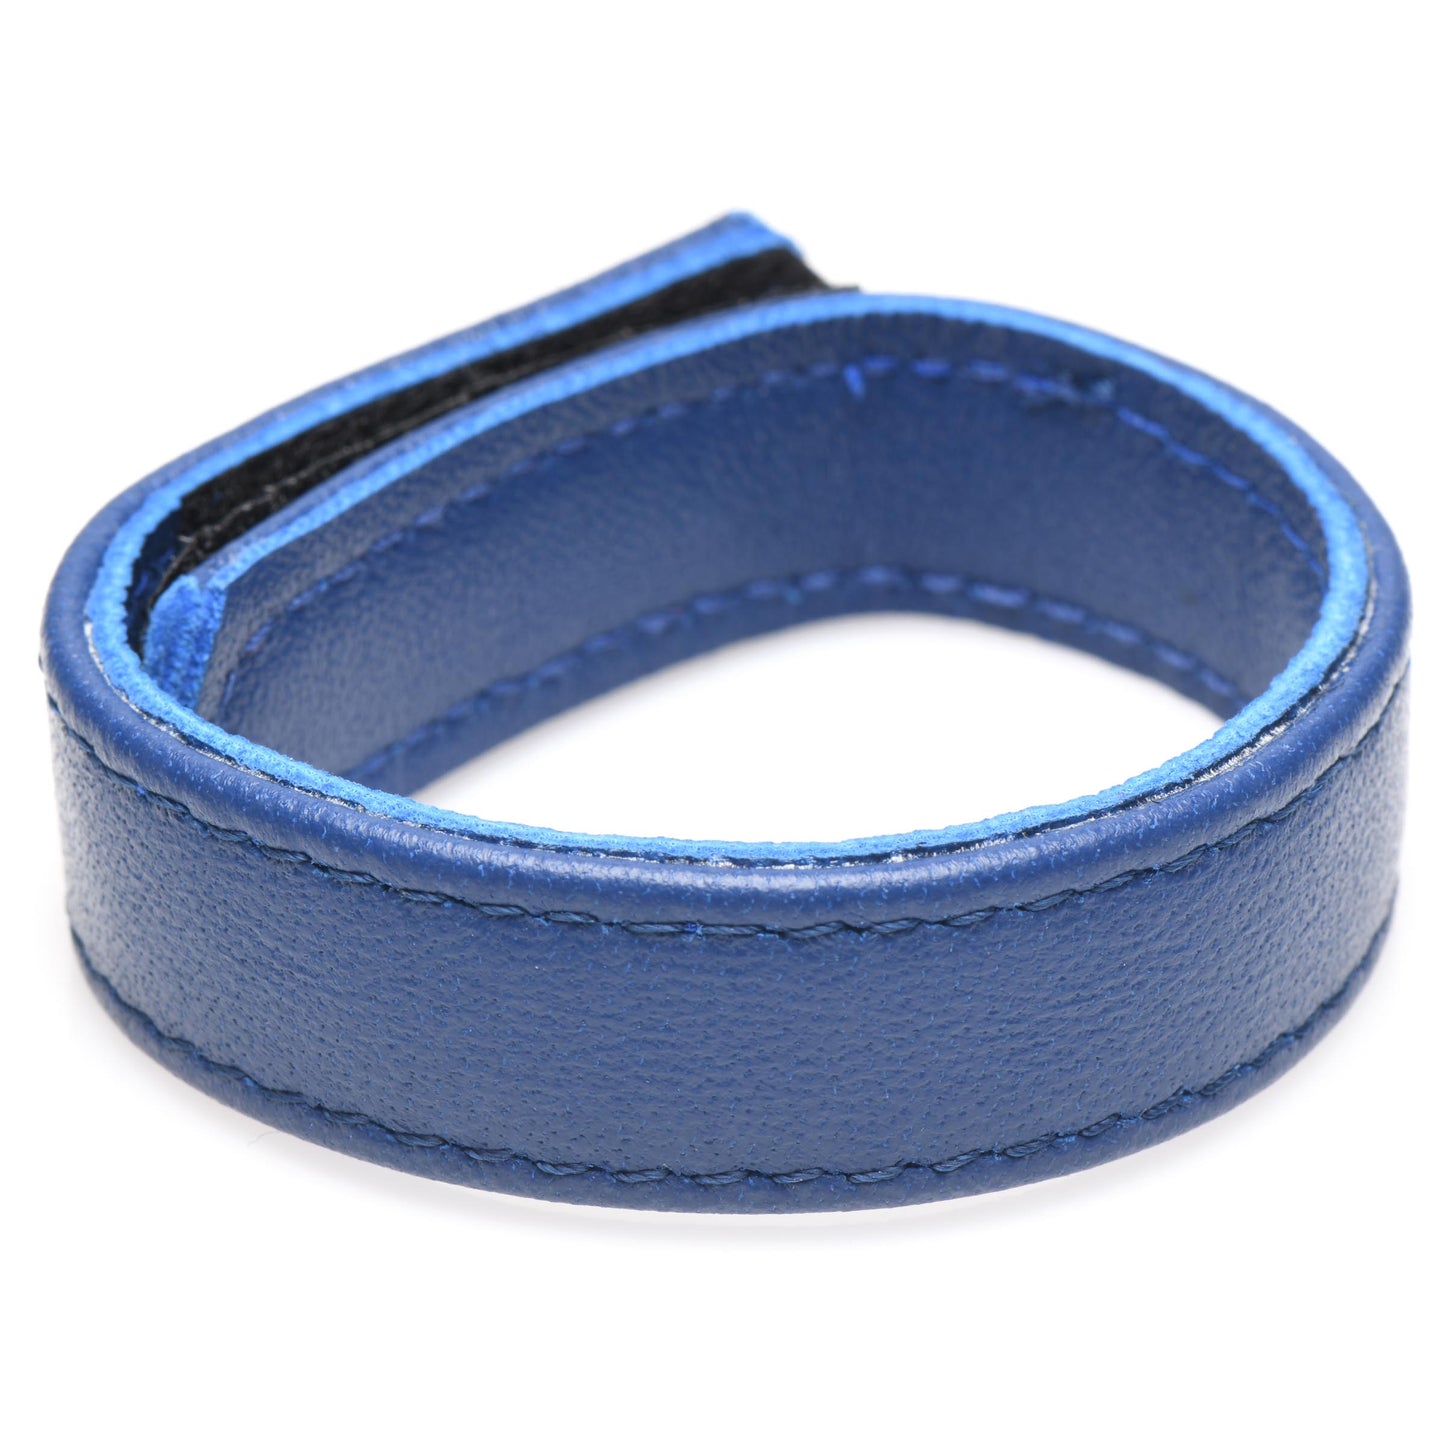 Velcro Leather Cock Ring - Blue - UABDSM